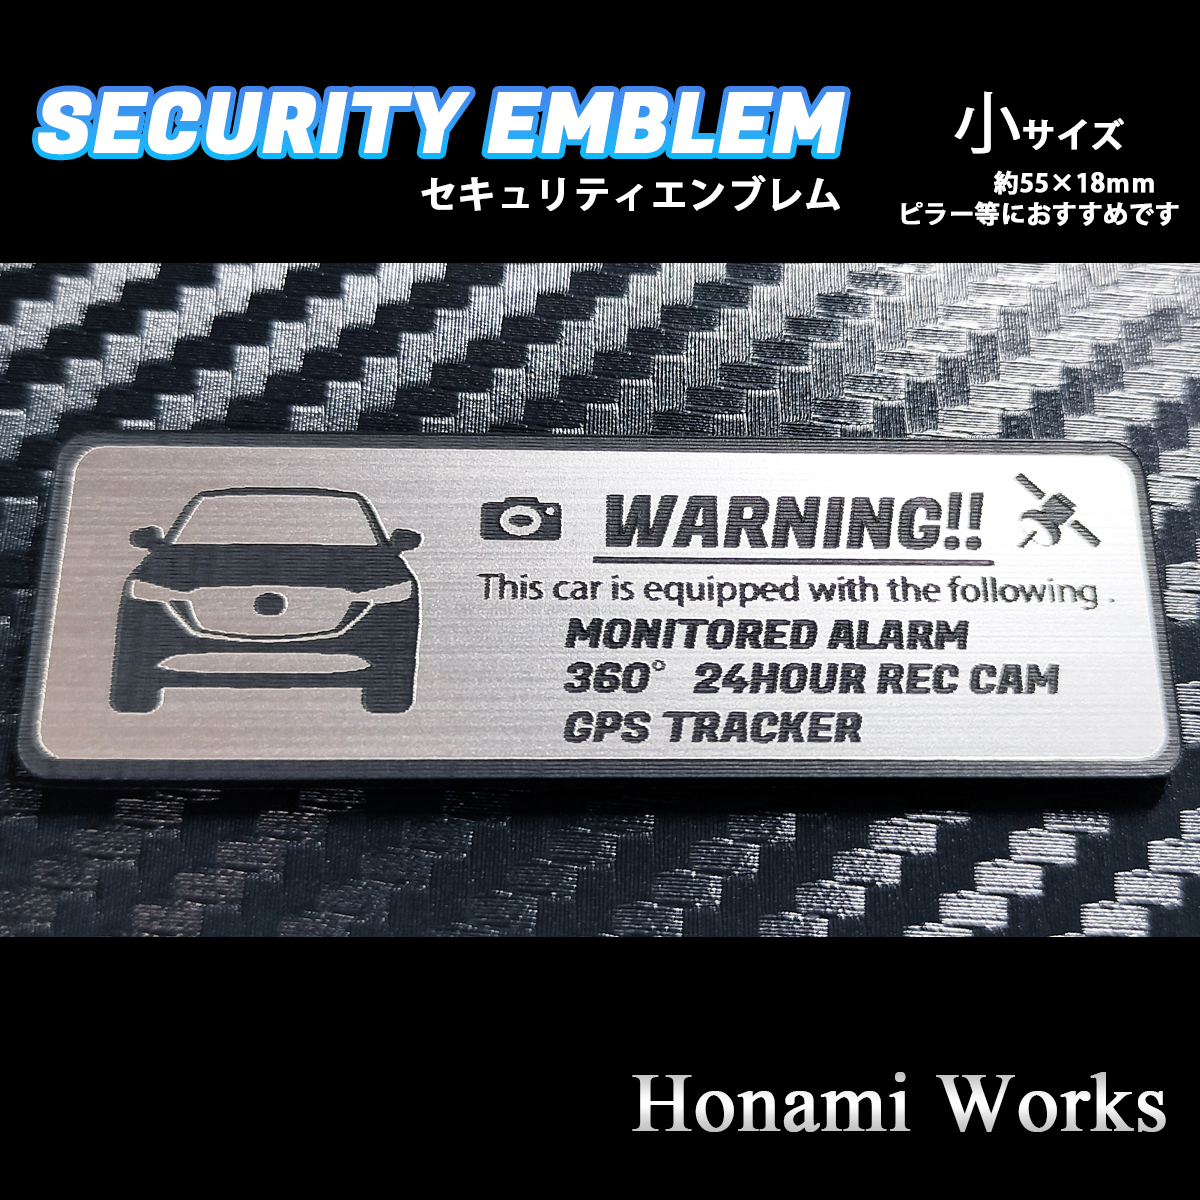  anonymity * guarantee! new model KF series latter term CX-5 security emblem sticker small crime prevention anti-theft 24 hour monitoring do RaRe koGPS Mazda MAZDA